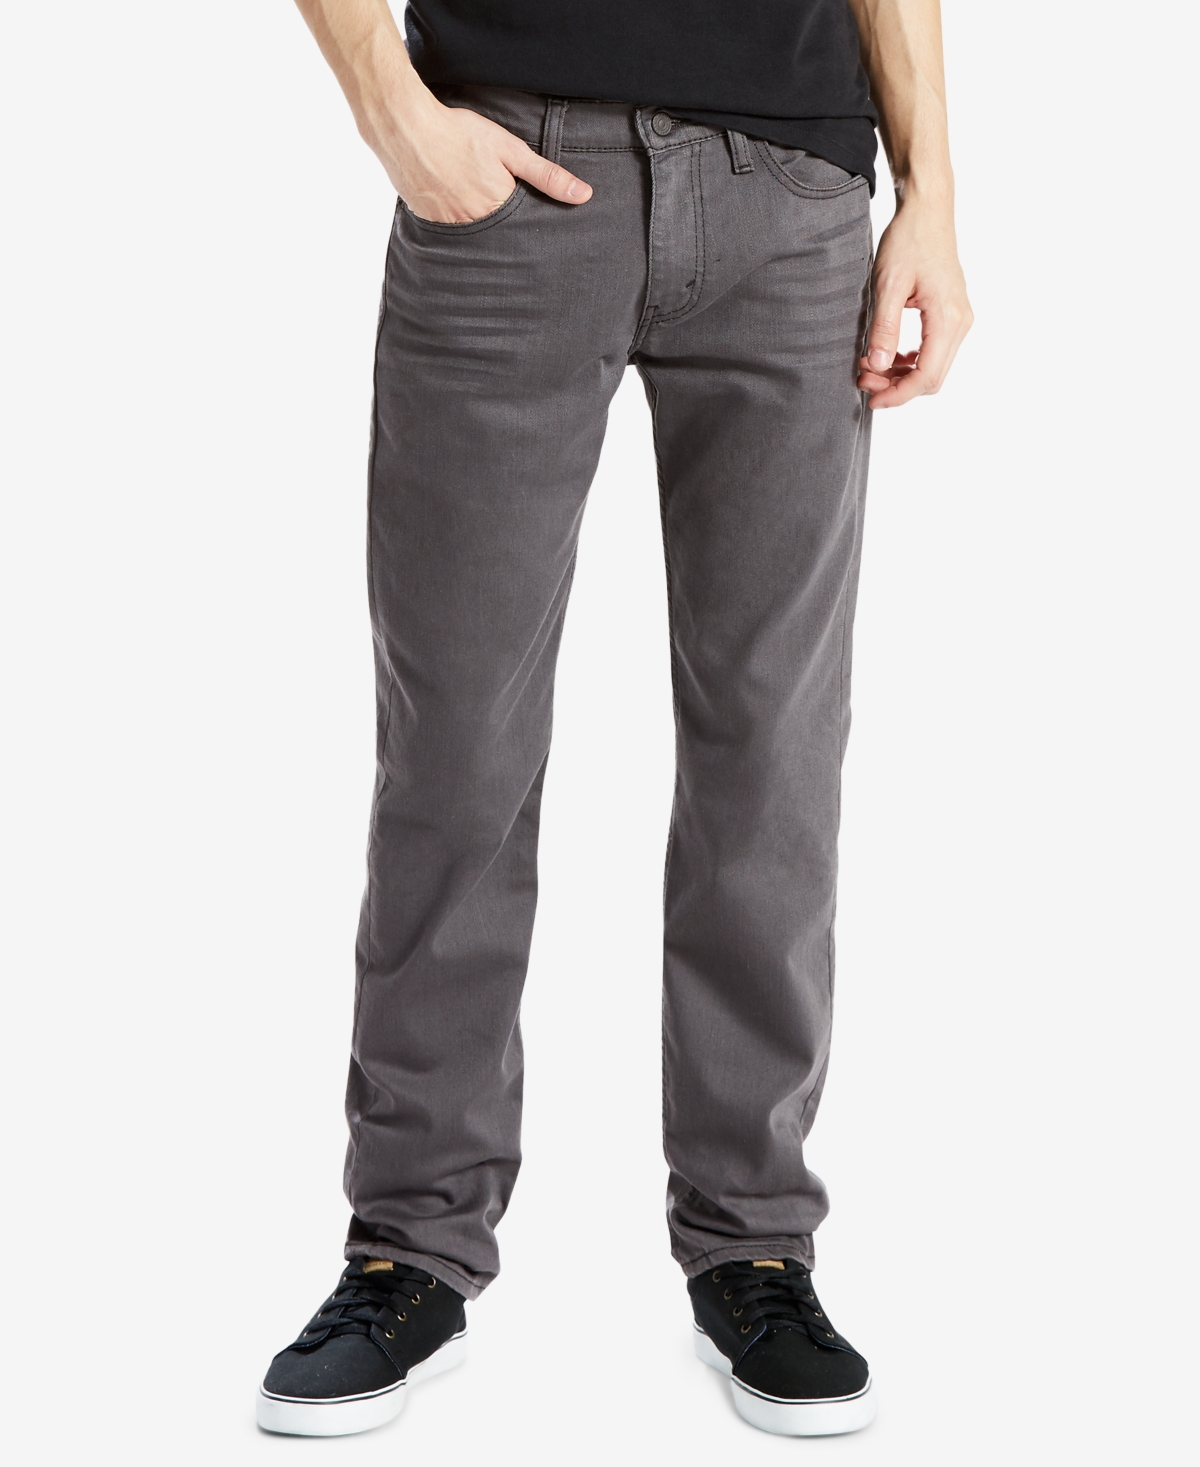 UPC 190416414284 product image for Levi's Men's 511 Slim Fit Jeans | upcitemdb.com